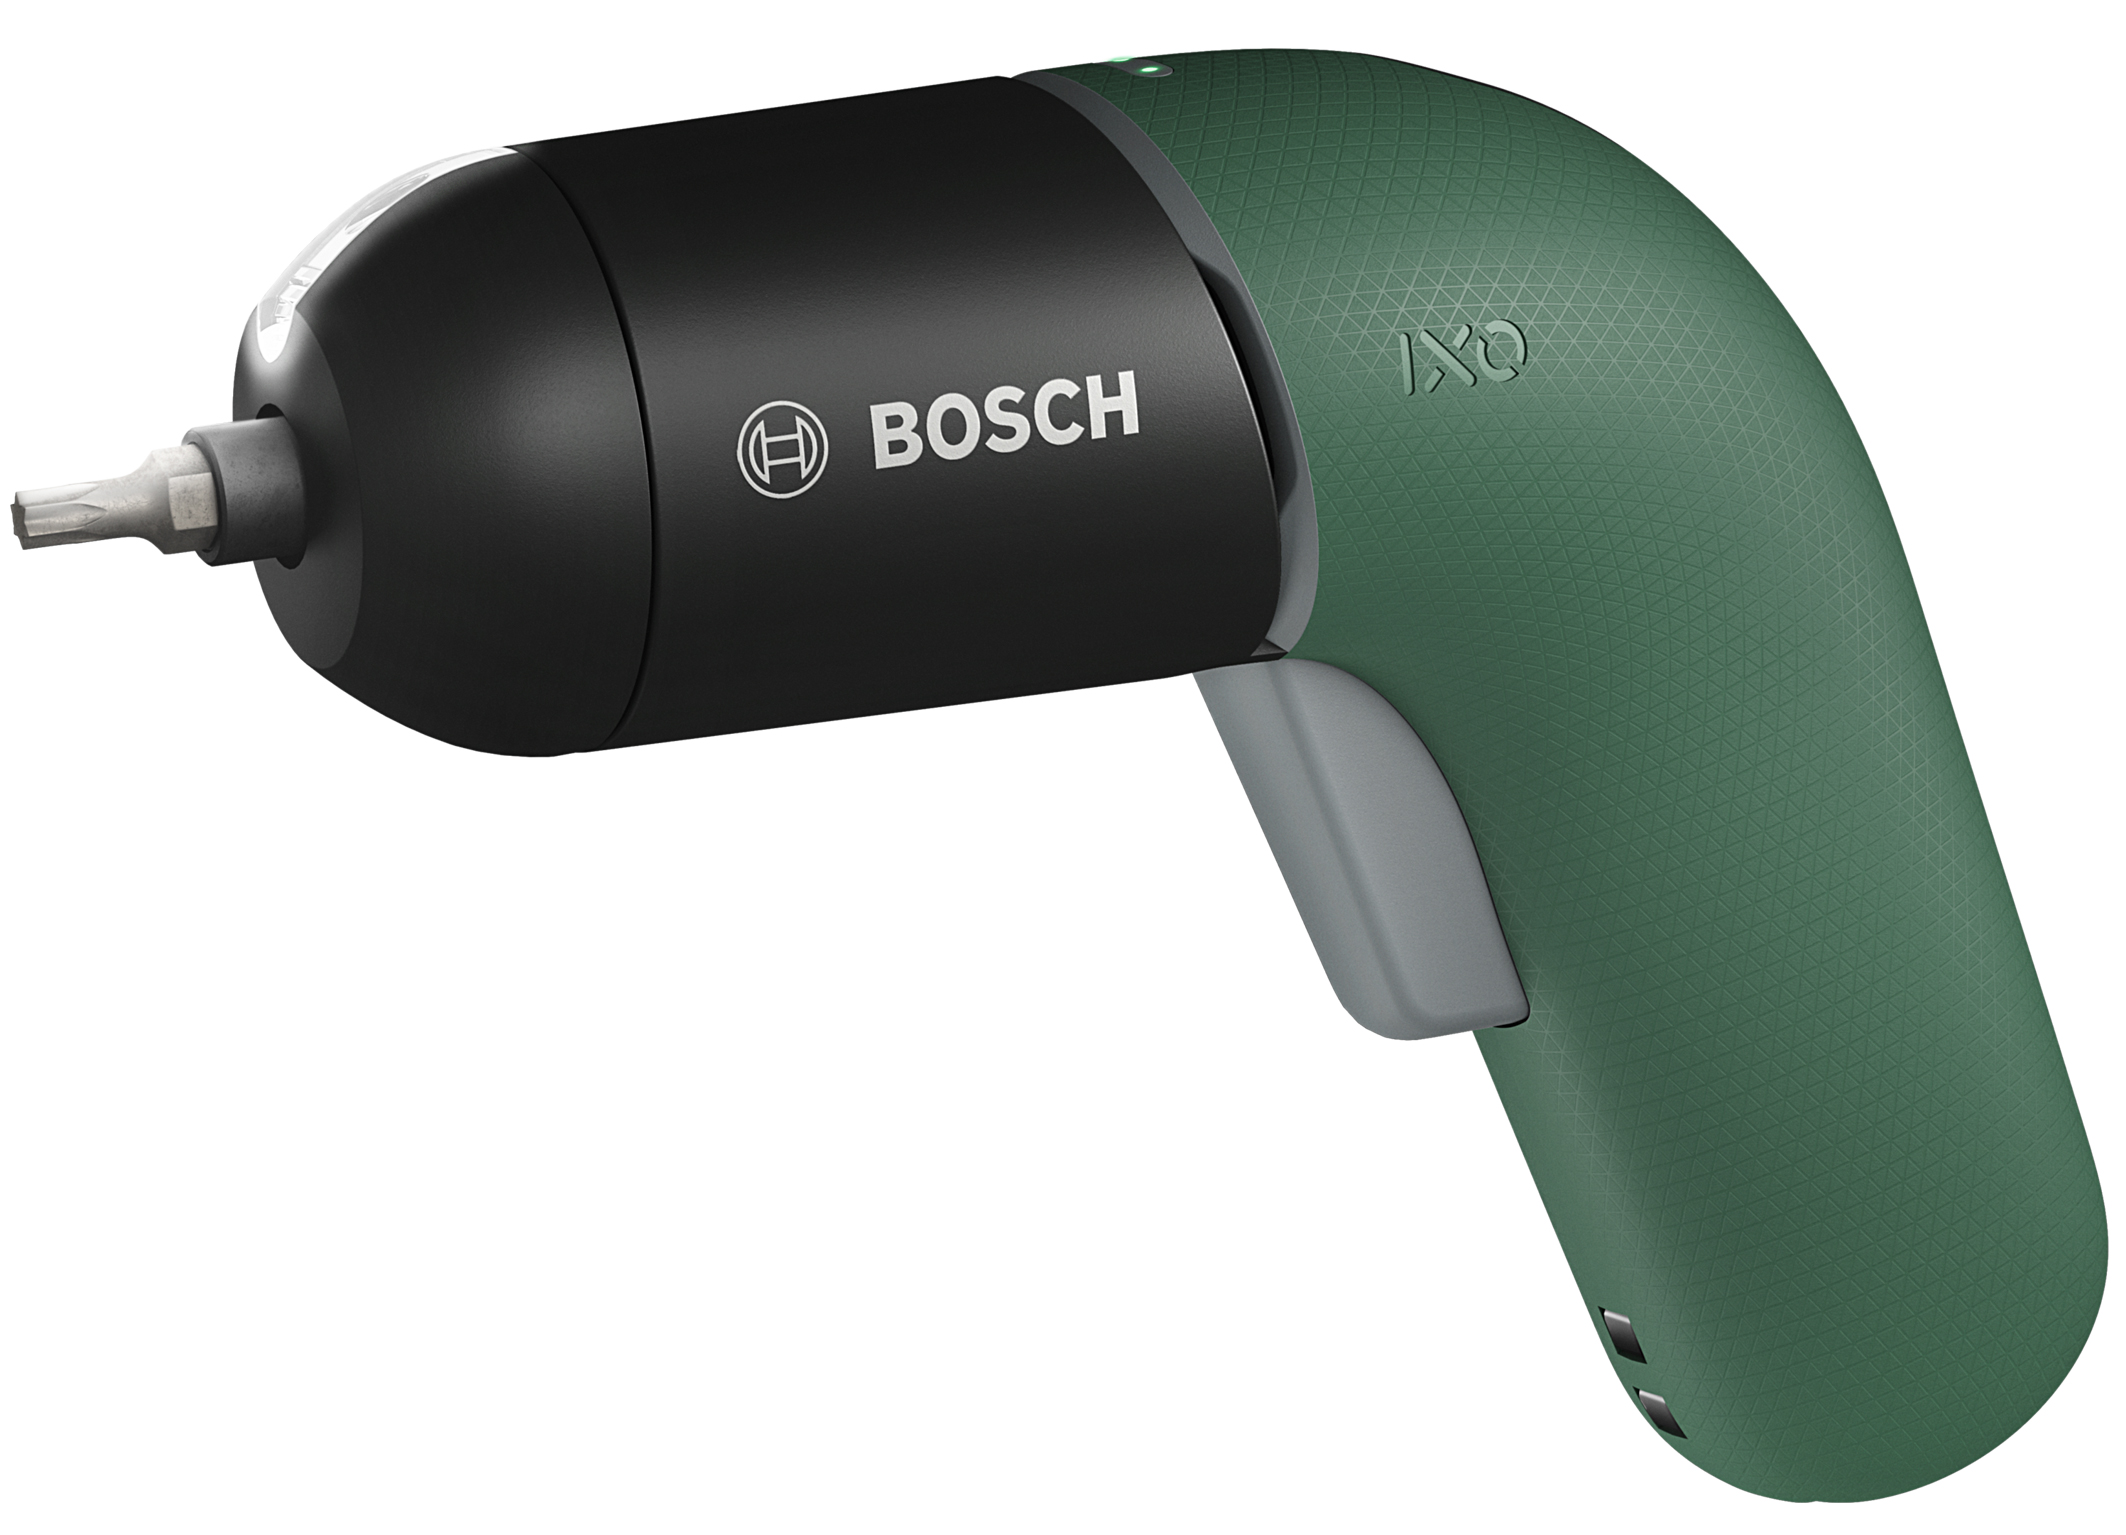 Bosch reinvents the Ixo